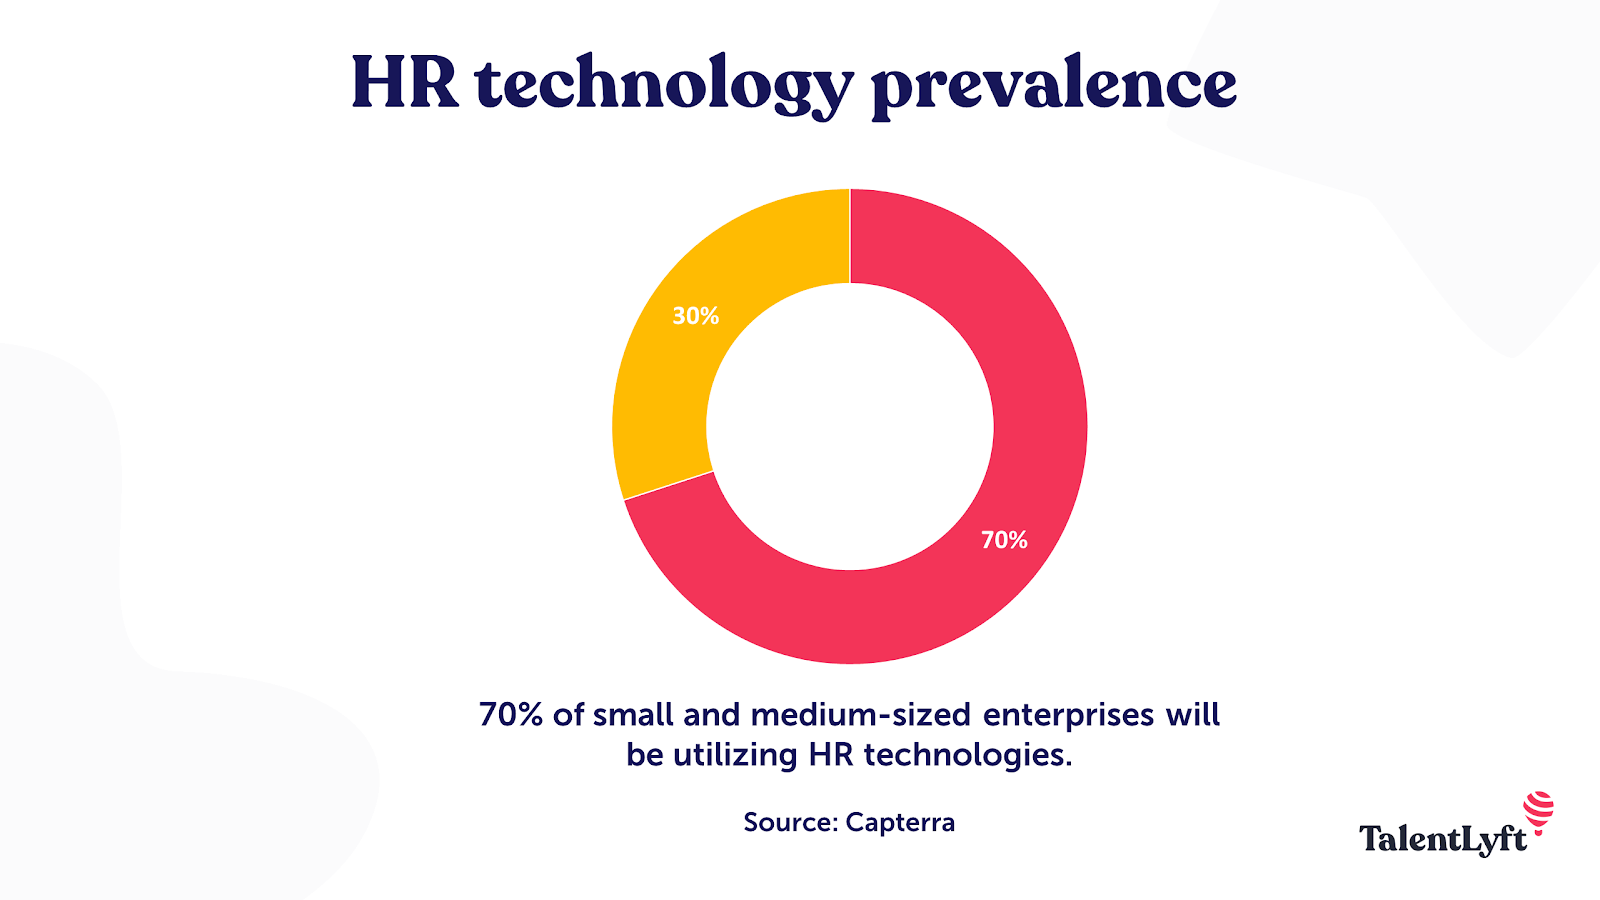 HR technology prevalence statistic